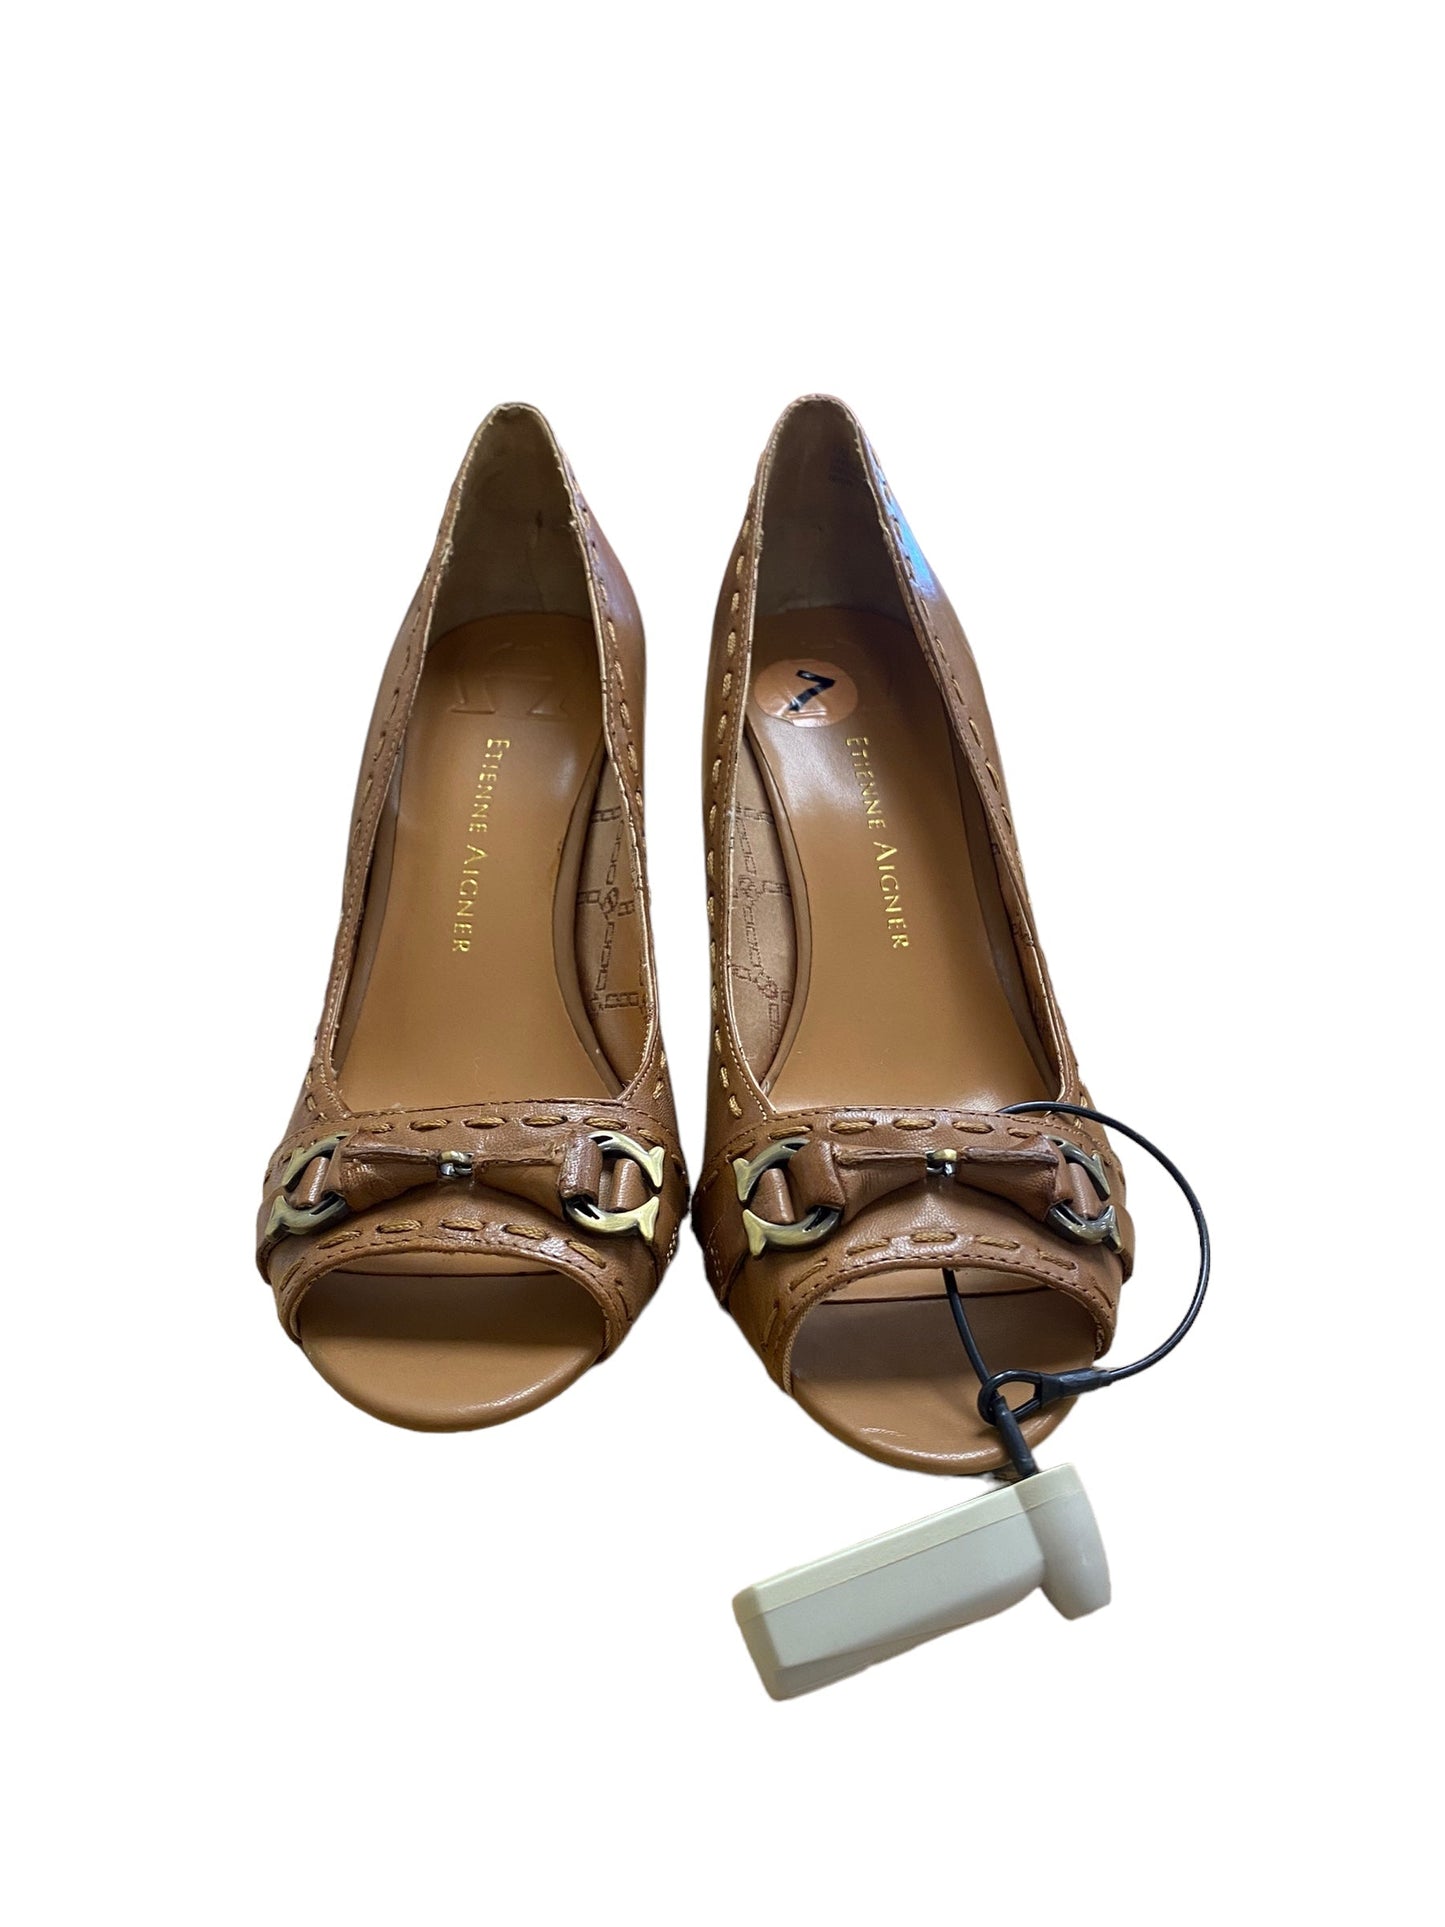 Brown Shoes Heels Stiletto Etienne Aigner, Size 7